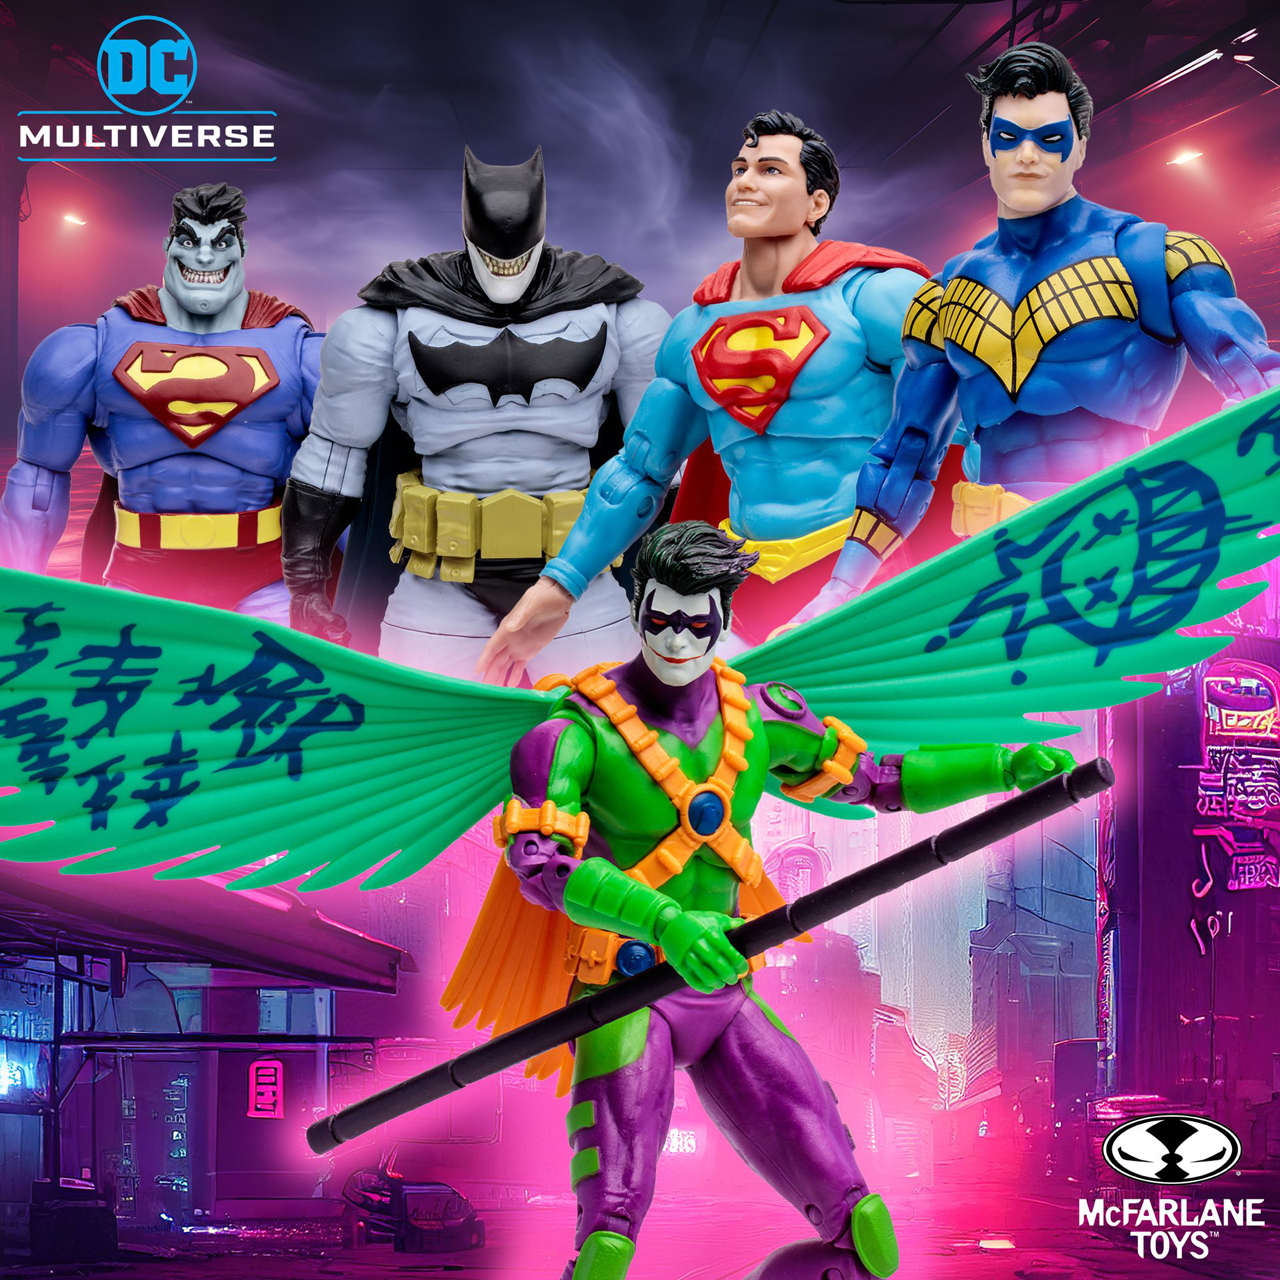 McFarlane-DC-Multiverse-Nightfall-Nightwing-Classic-Superman-Bizarro-Batzarro-Red-Robin-Jokerized-Action-Figures